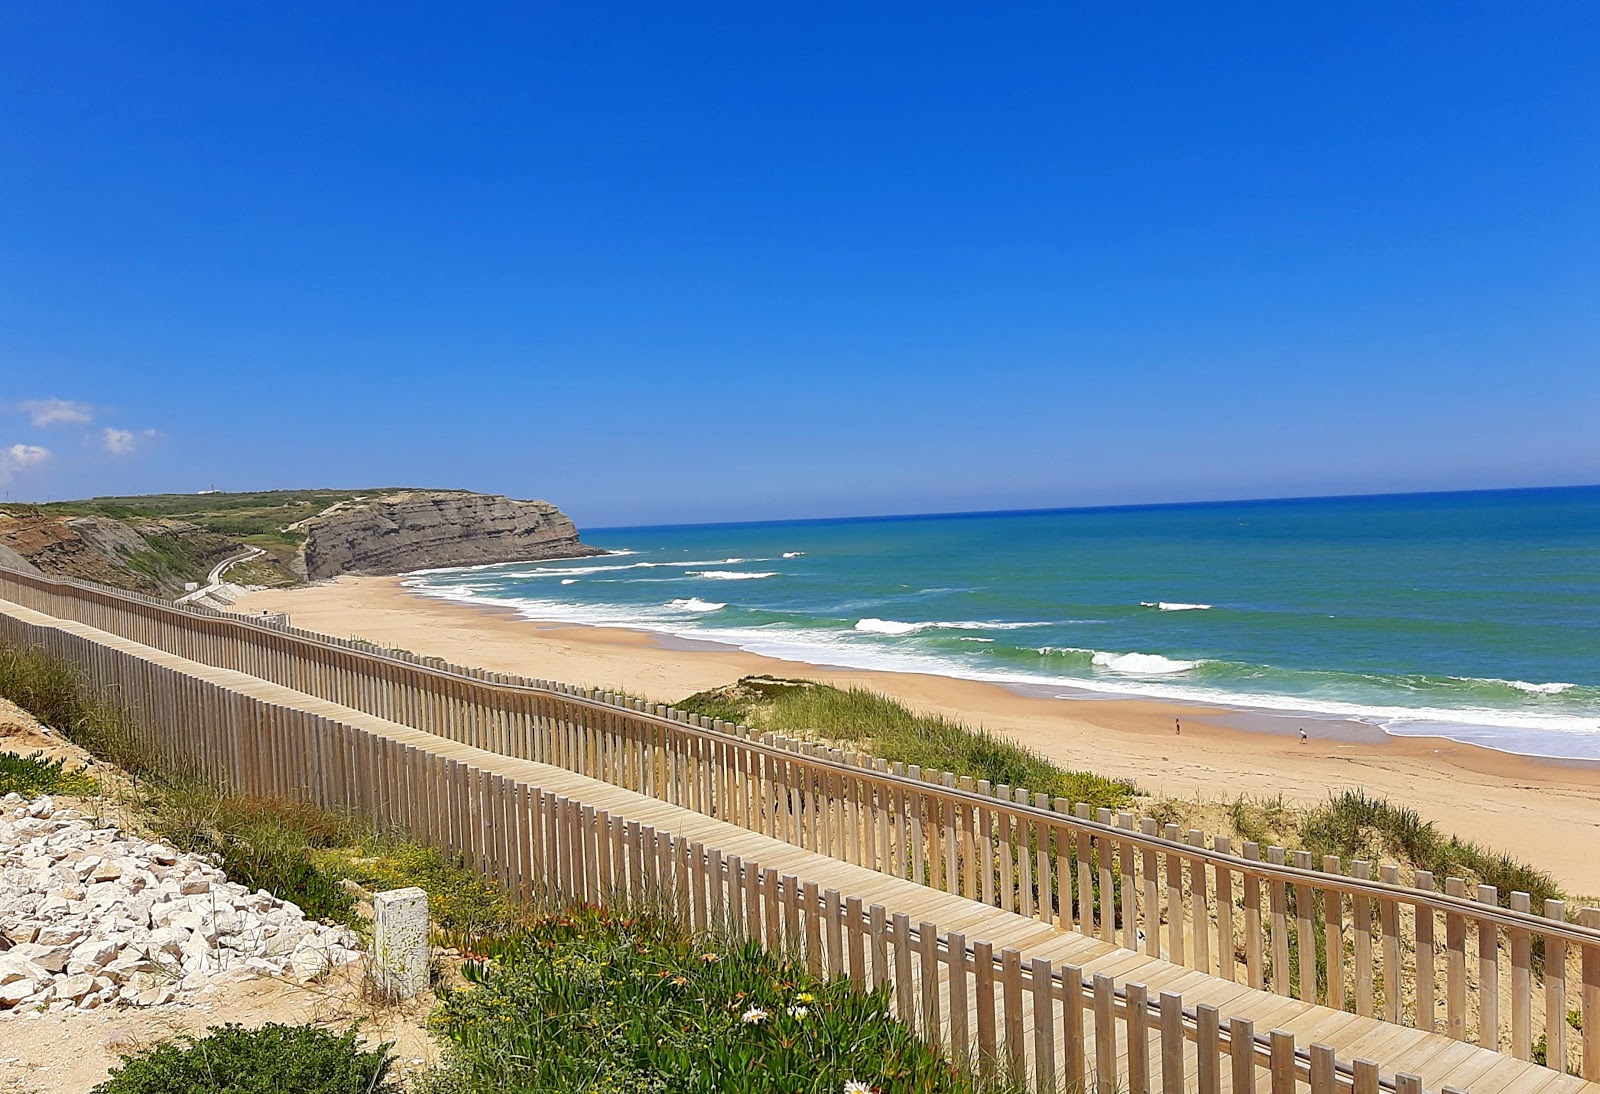 Photo of Praia Azul with long straight shore